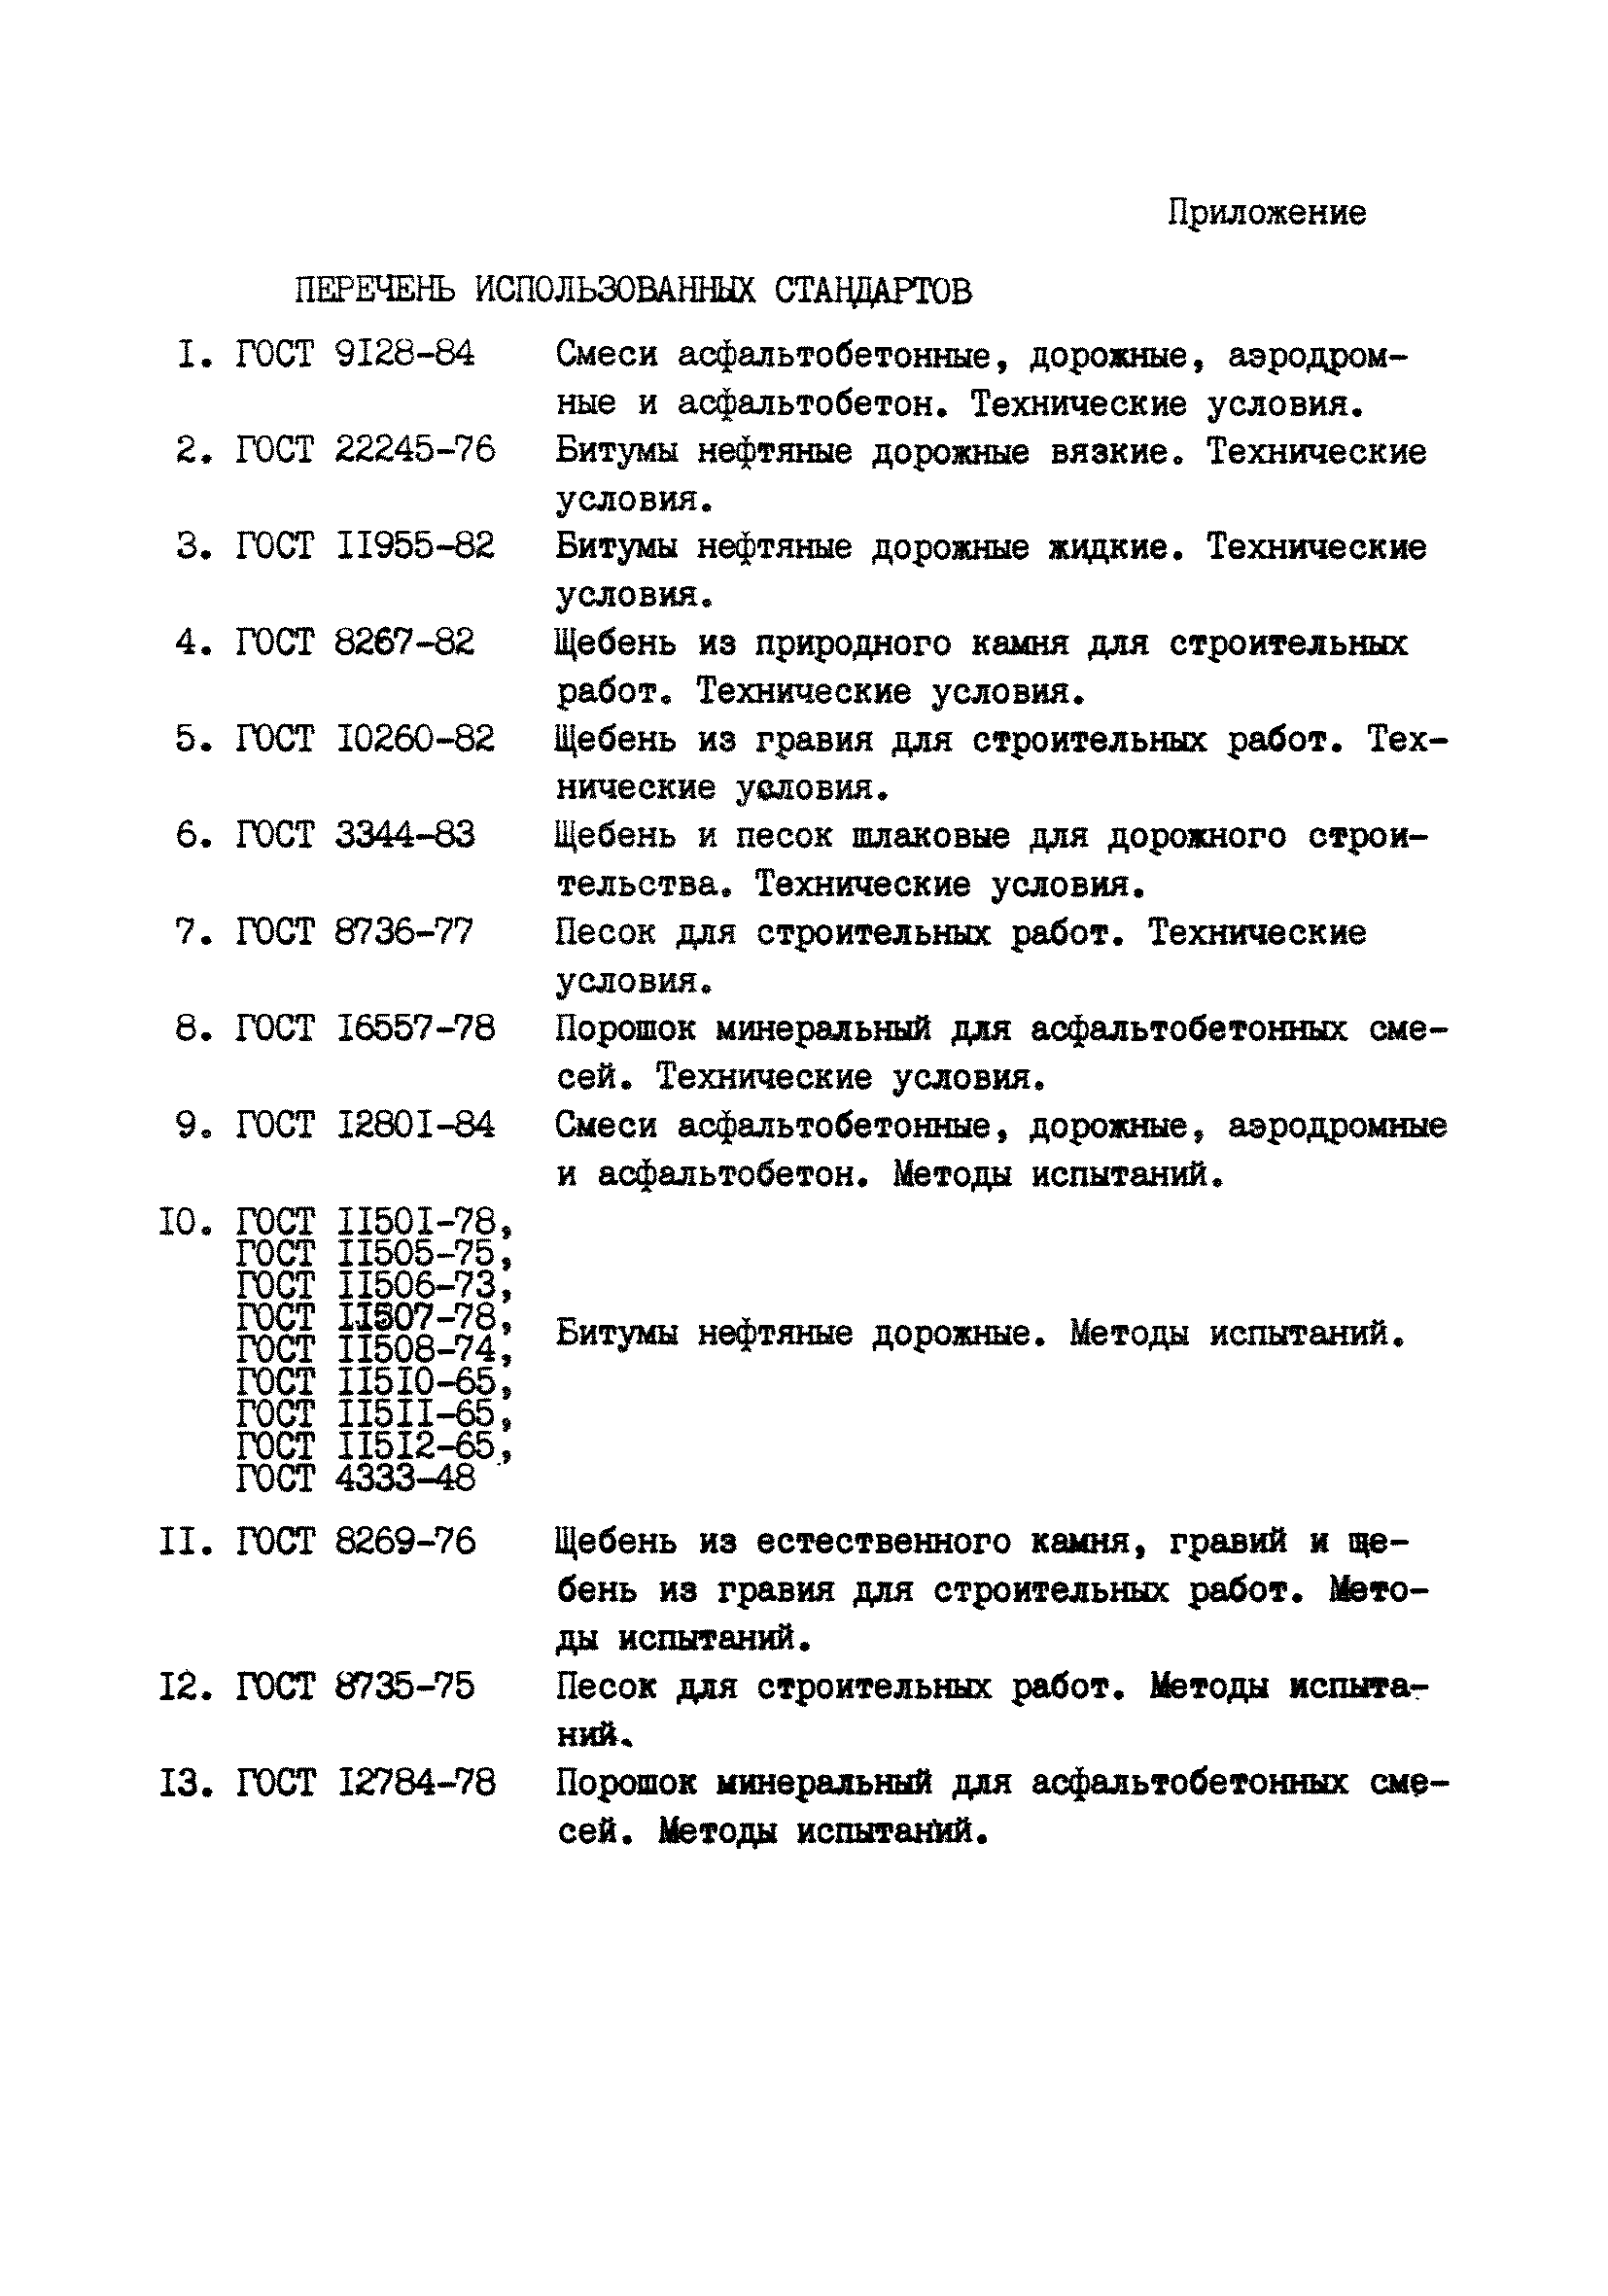 ТУ 218 РСФСР 541-85